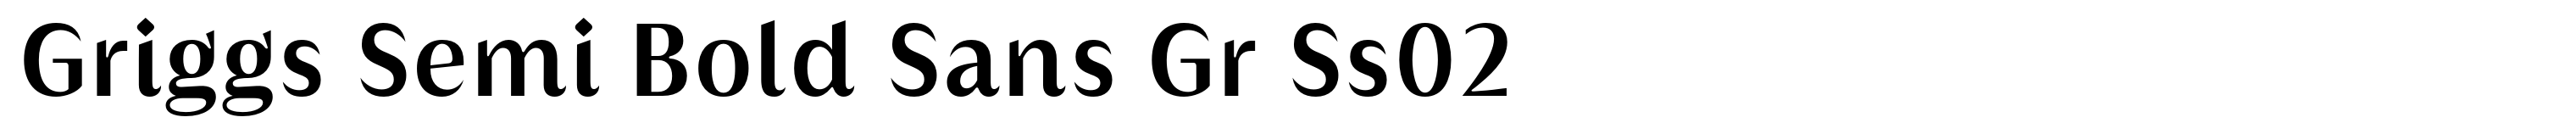 Griggs Semi Bold Sans Gr Ss02